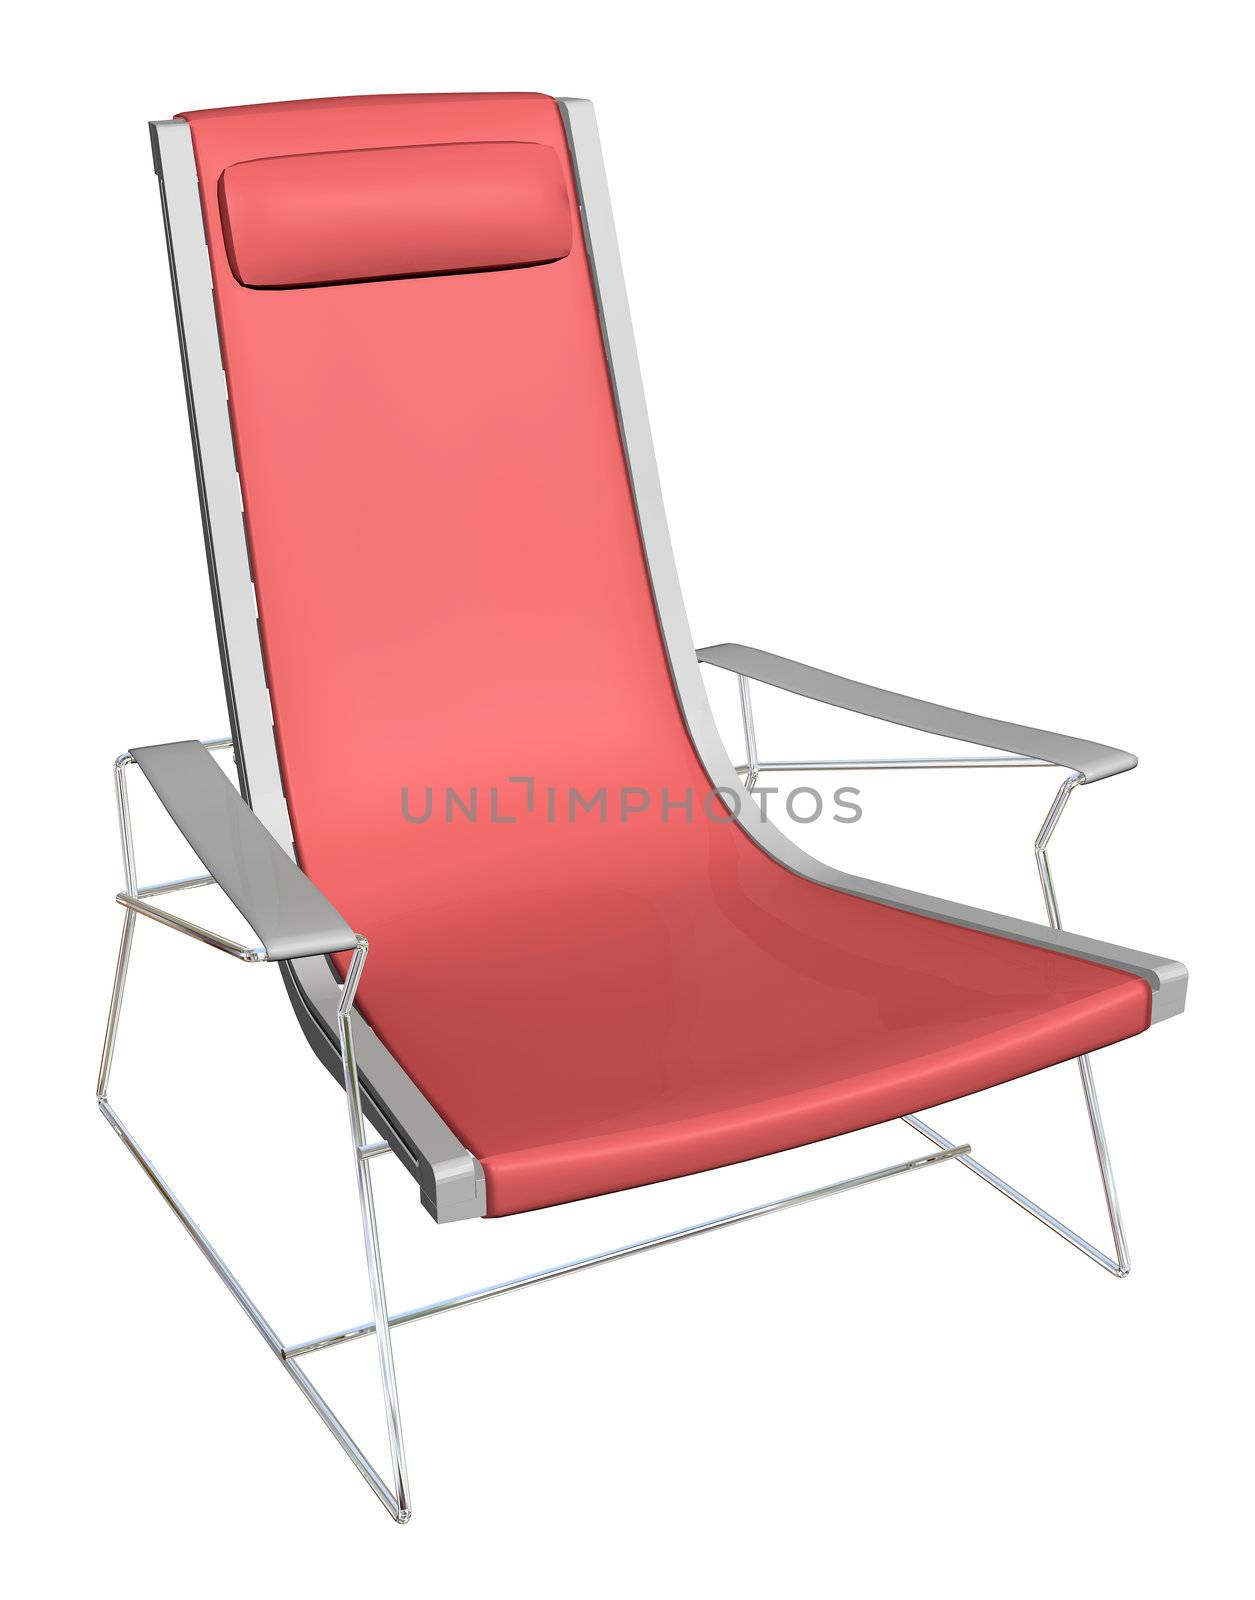 Plastic lounge chair, 3D illustration by Morphart